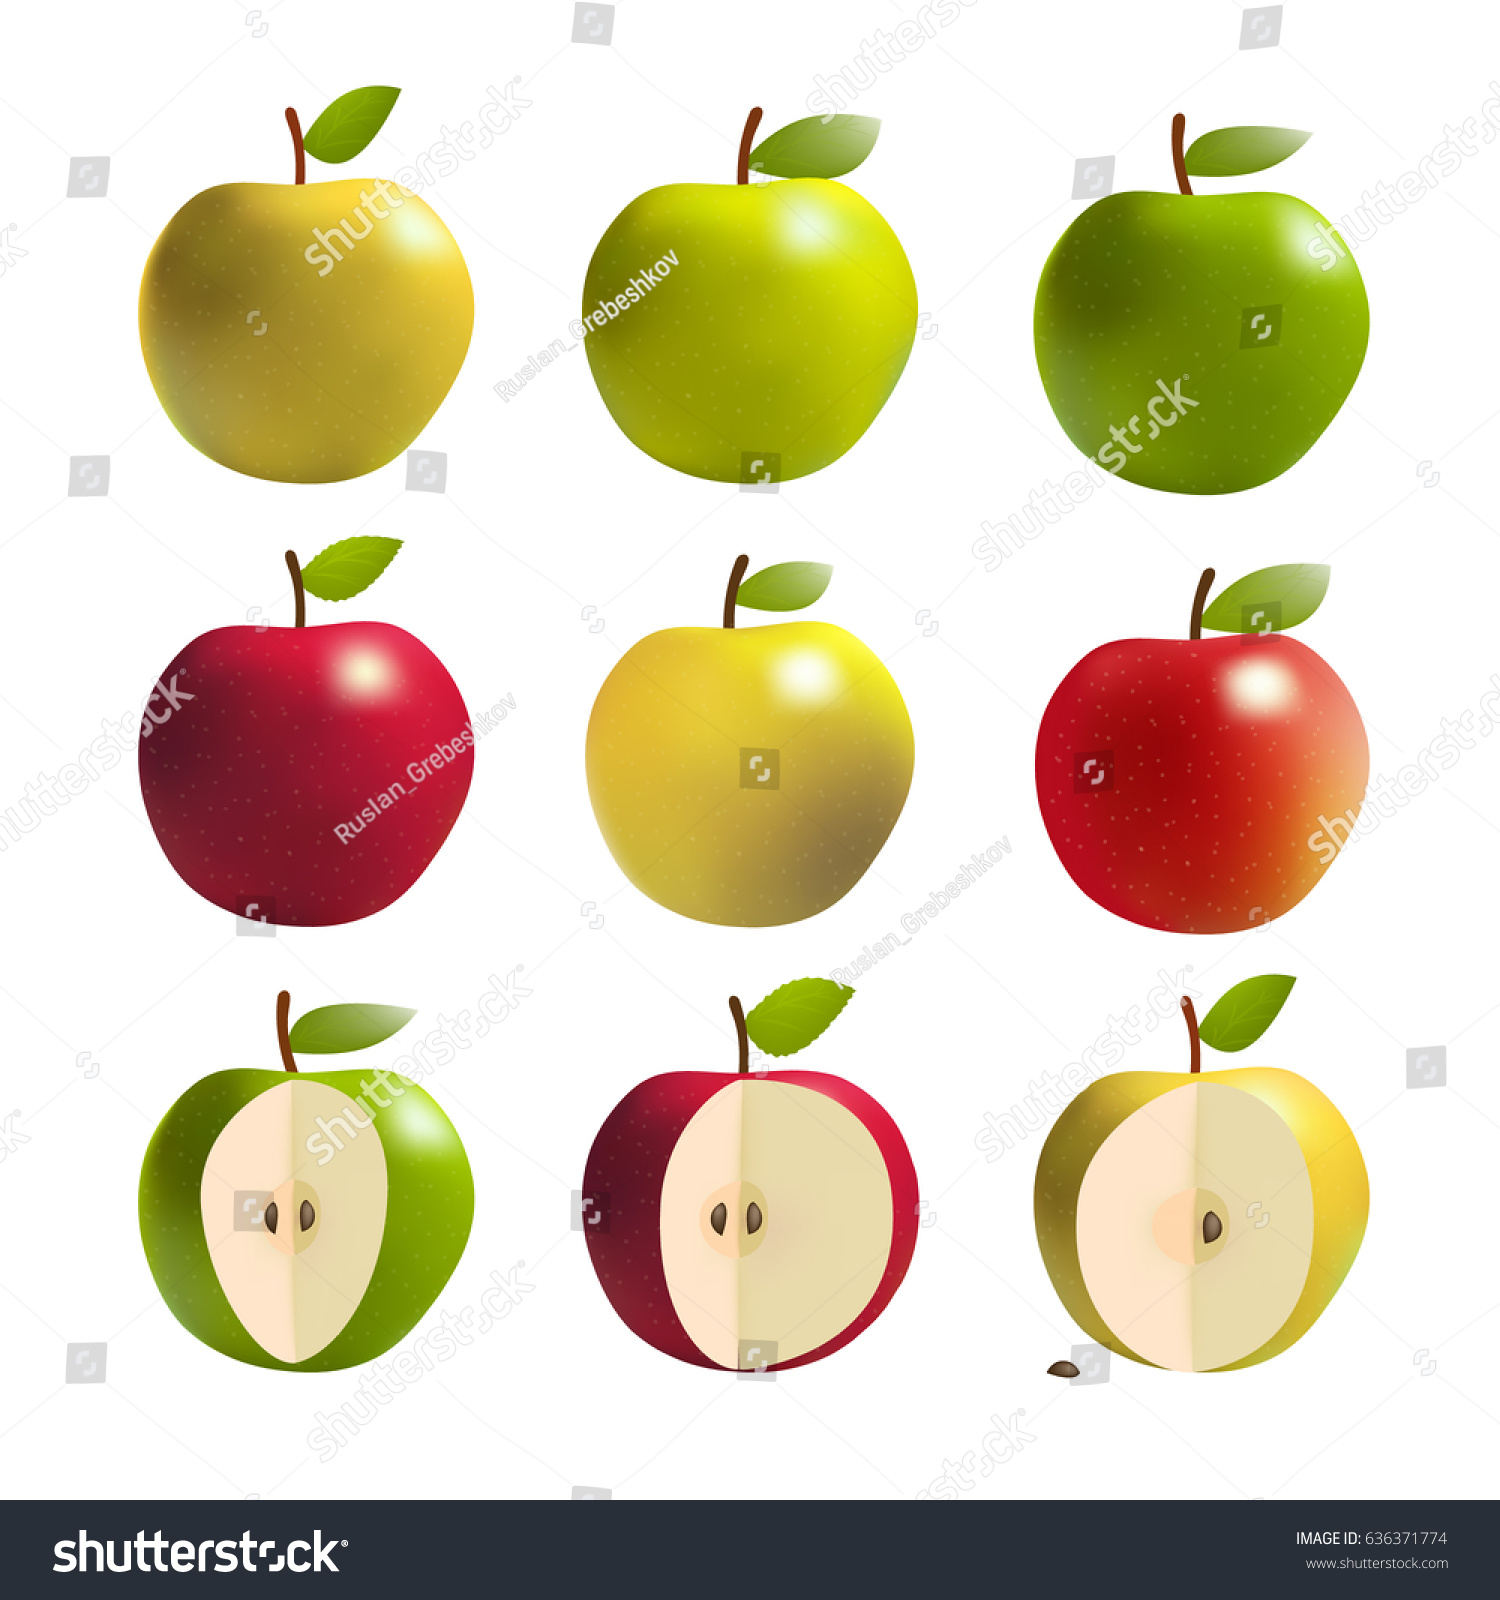 Vector Set Apples Different Colors Stock Vector 636371774 - Shutterstock